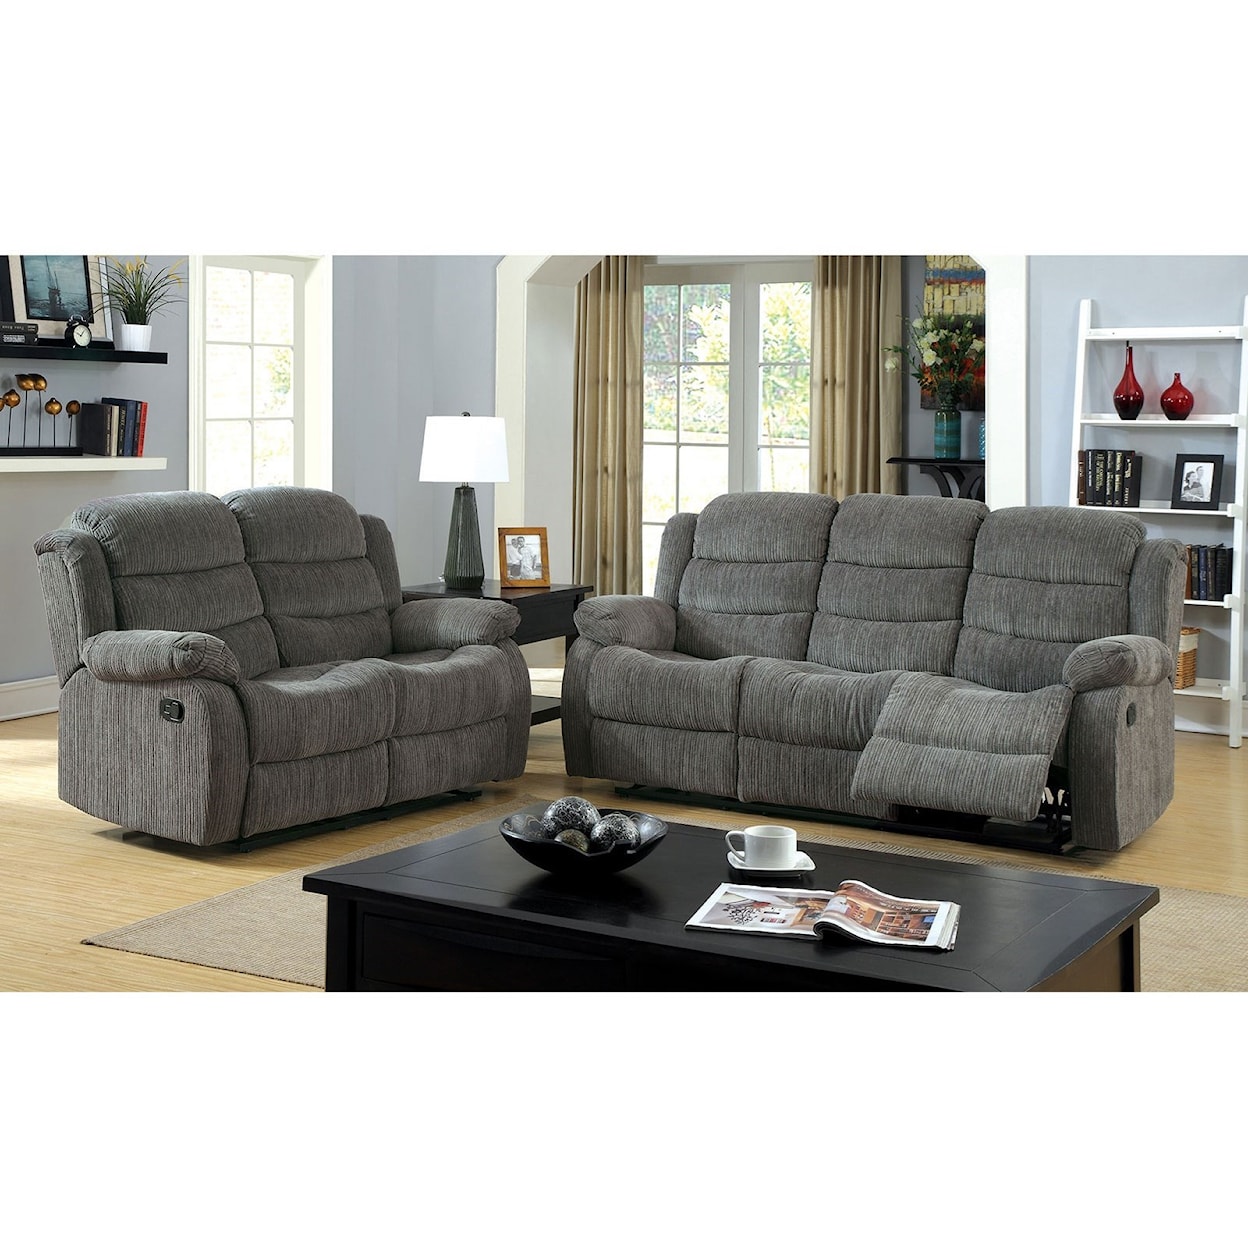 Furniture of America Millville Reclining Sofa